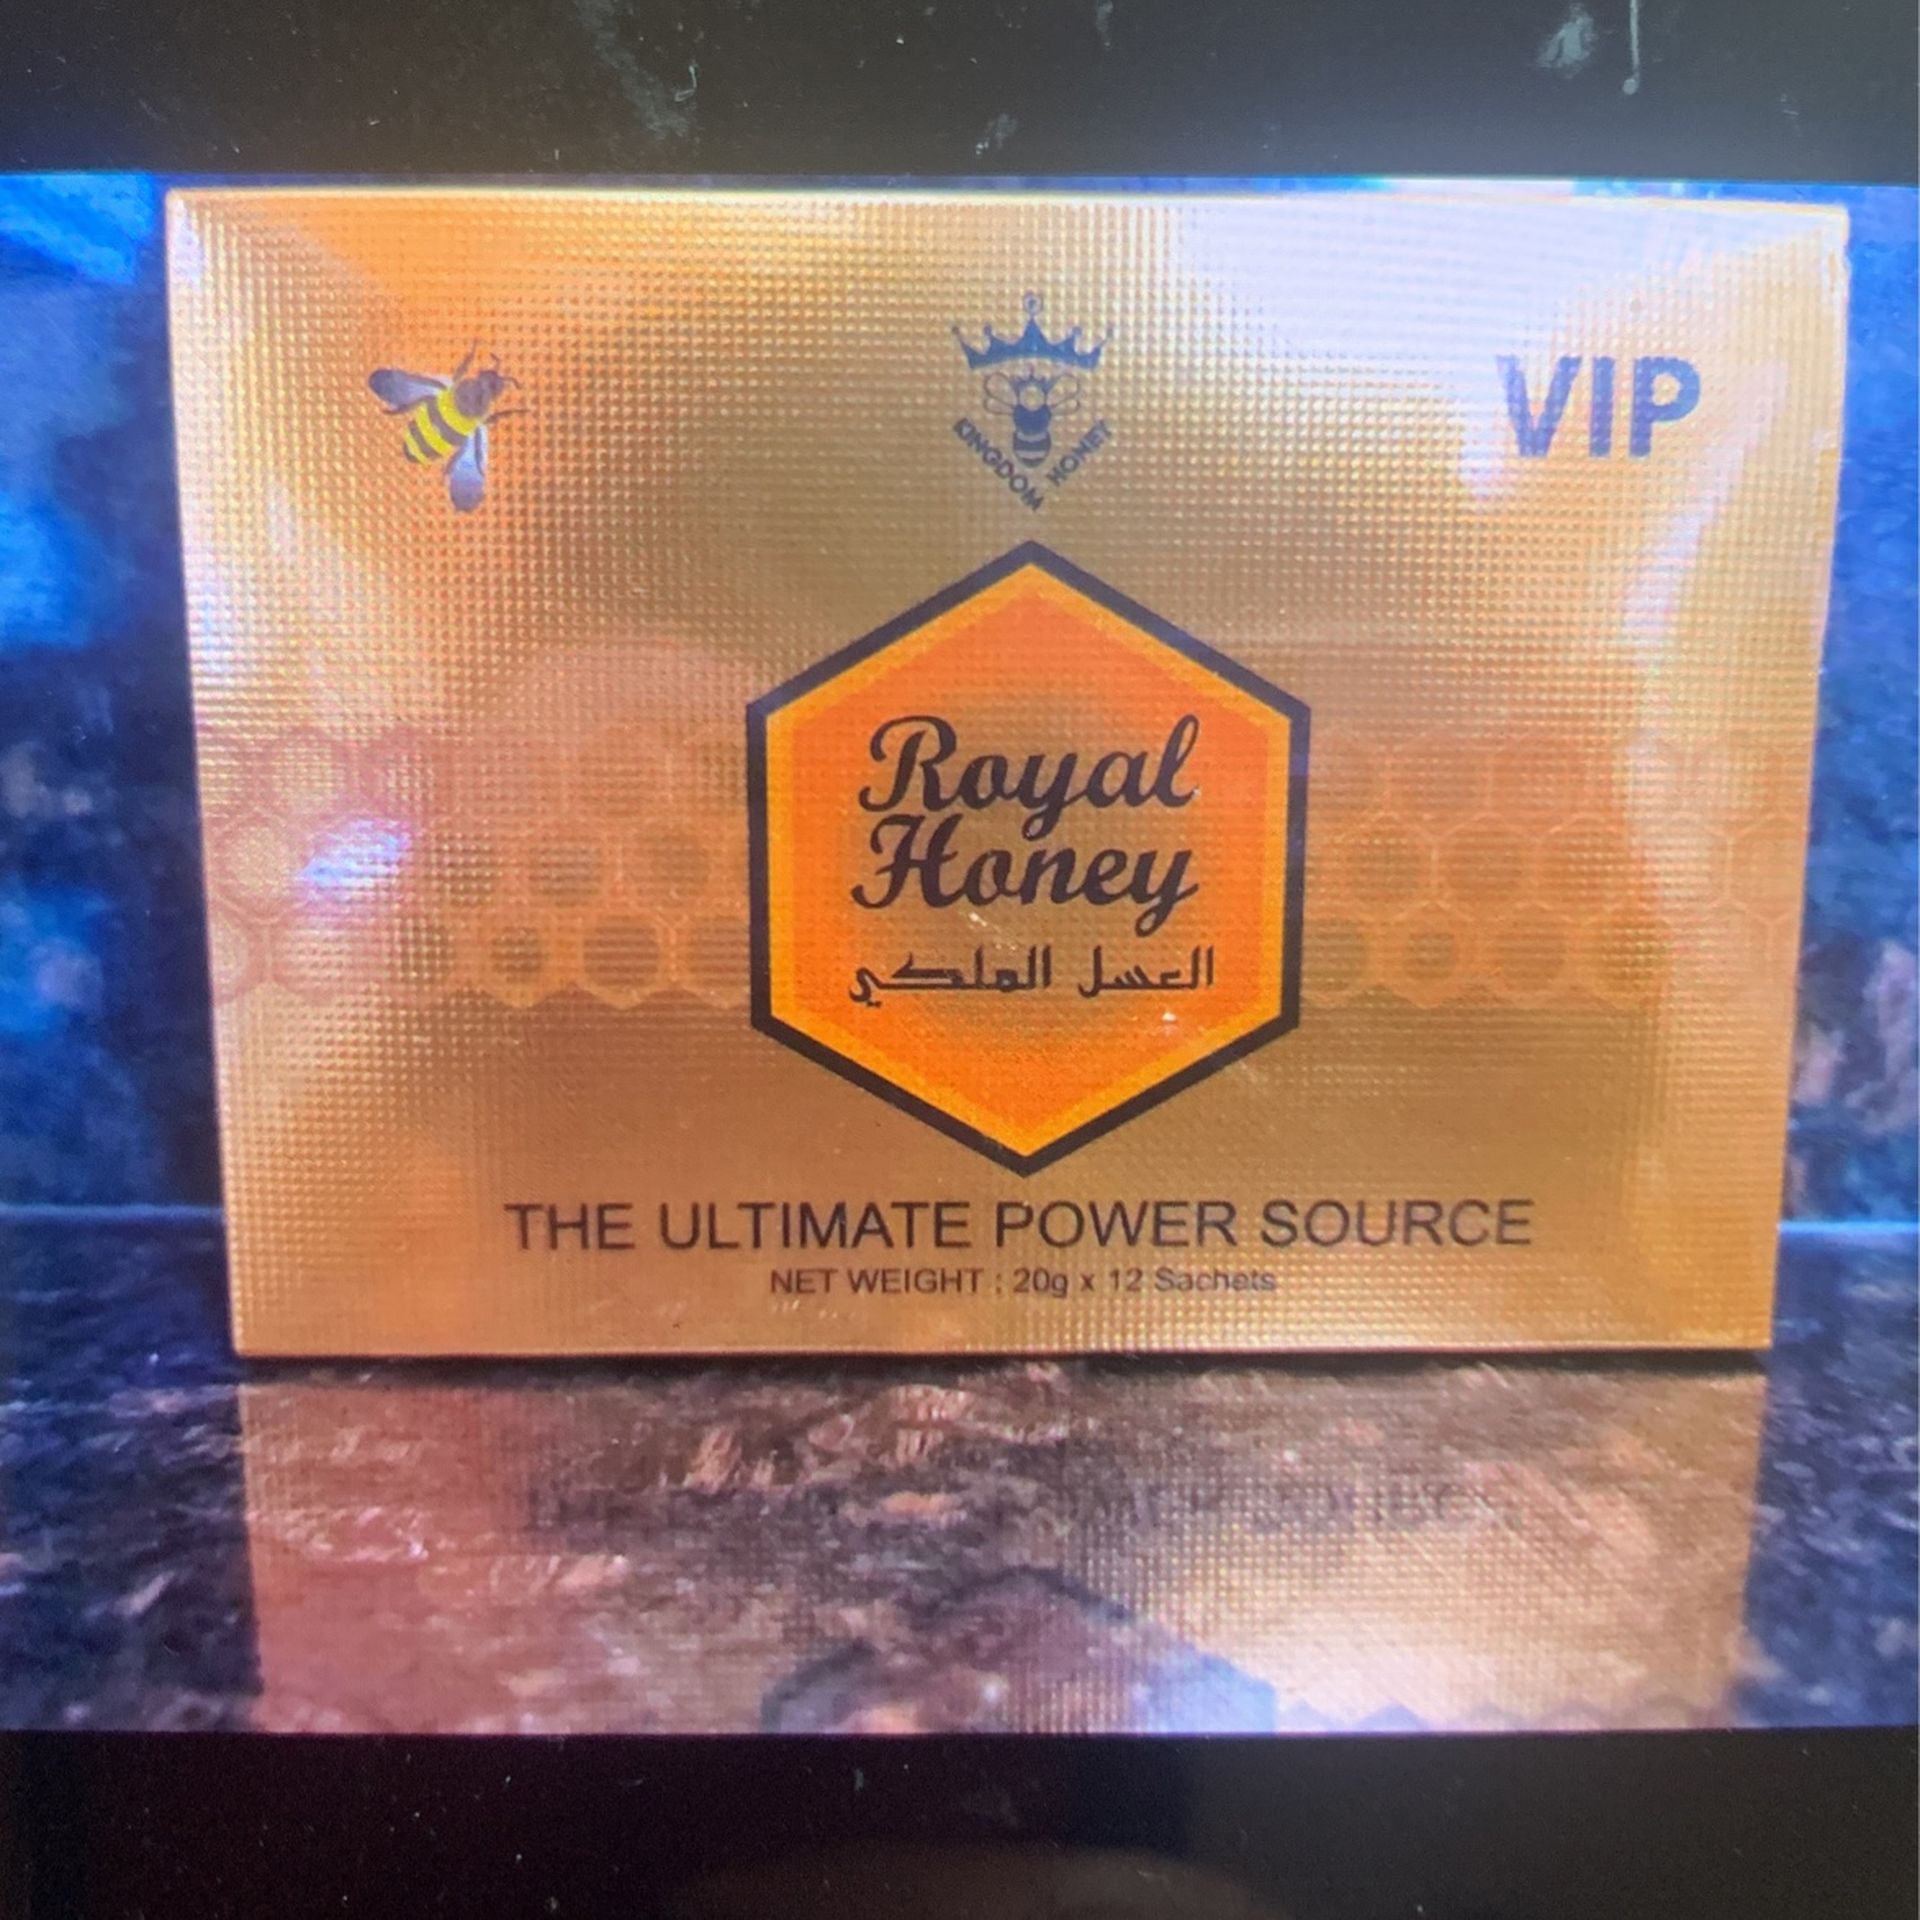 Royal Honey VIP 12 SACHETS 20g